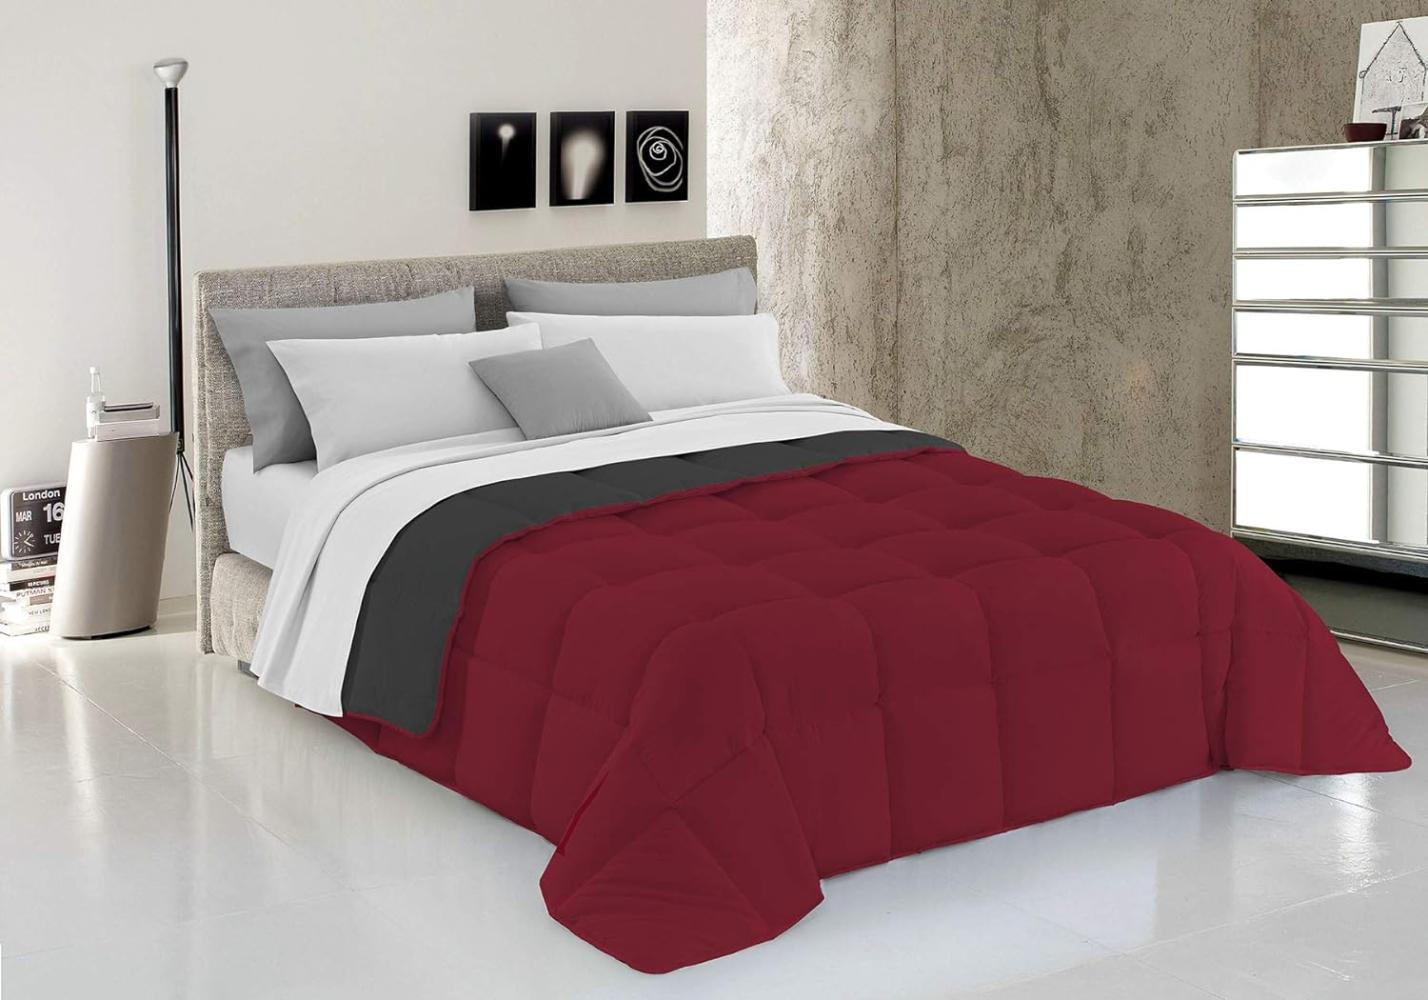 Italian Bed Linen Wintersteppdecke Elegant, Bordeaux/Dunkelgrau, Einzelne, 100% Mikrofaser, 170x260cm Bild 1